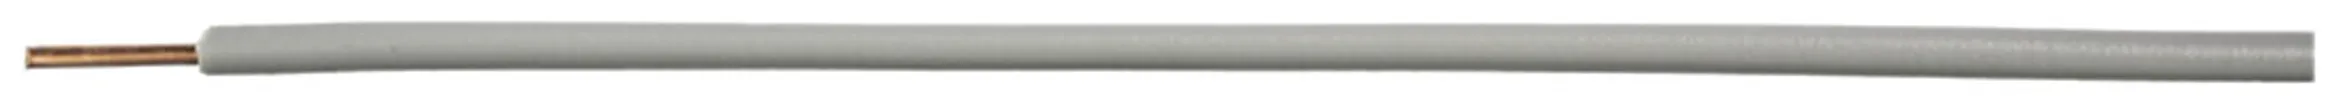 N-Draht H07Z1-U halogenfrei 1.5mm² 450/750V grau Cca 